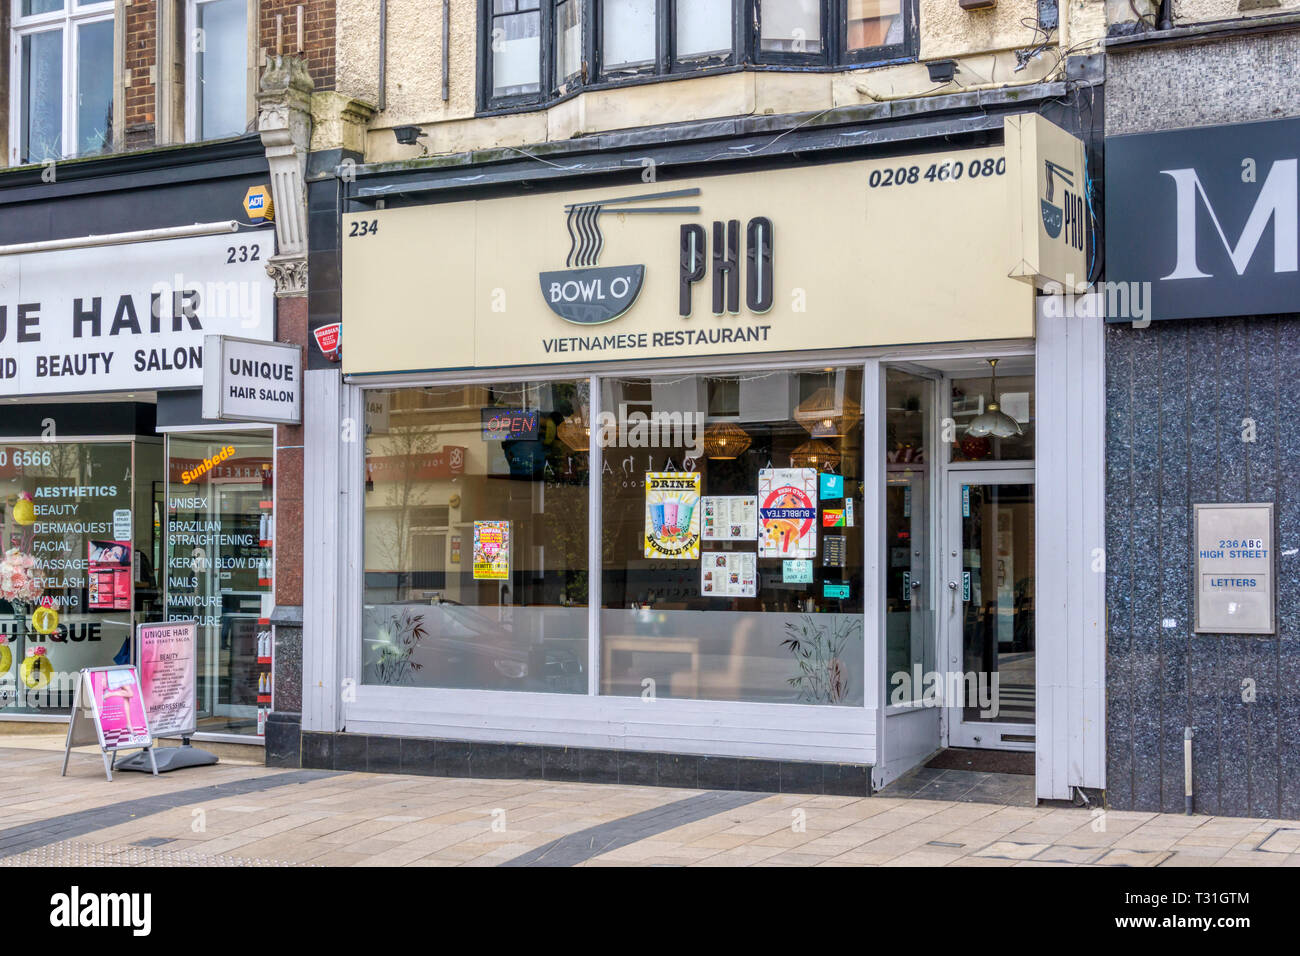 Bowl o' Pho Vietnamese Restaurant in Bromley, South London. Stock Photo